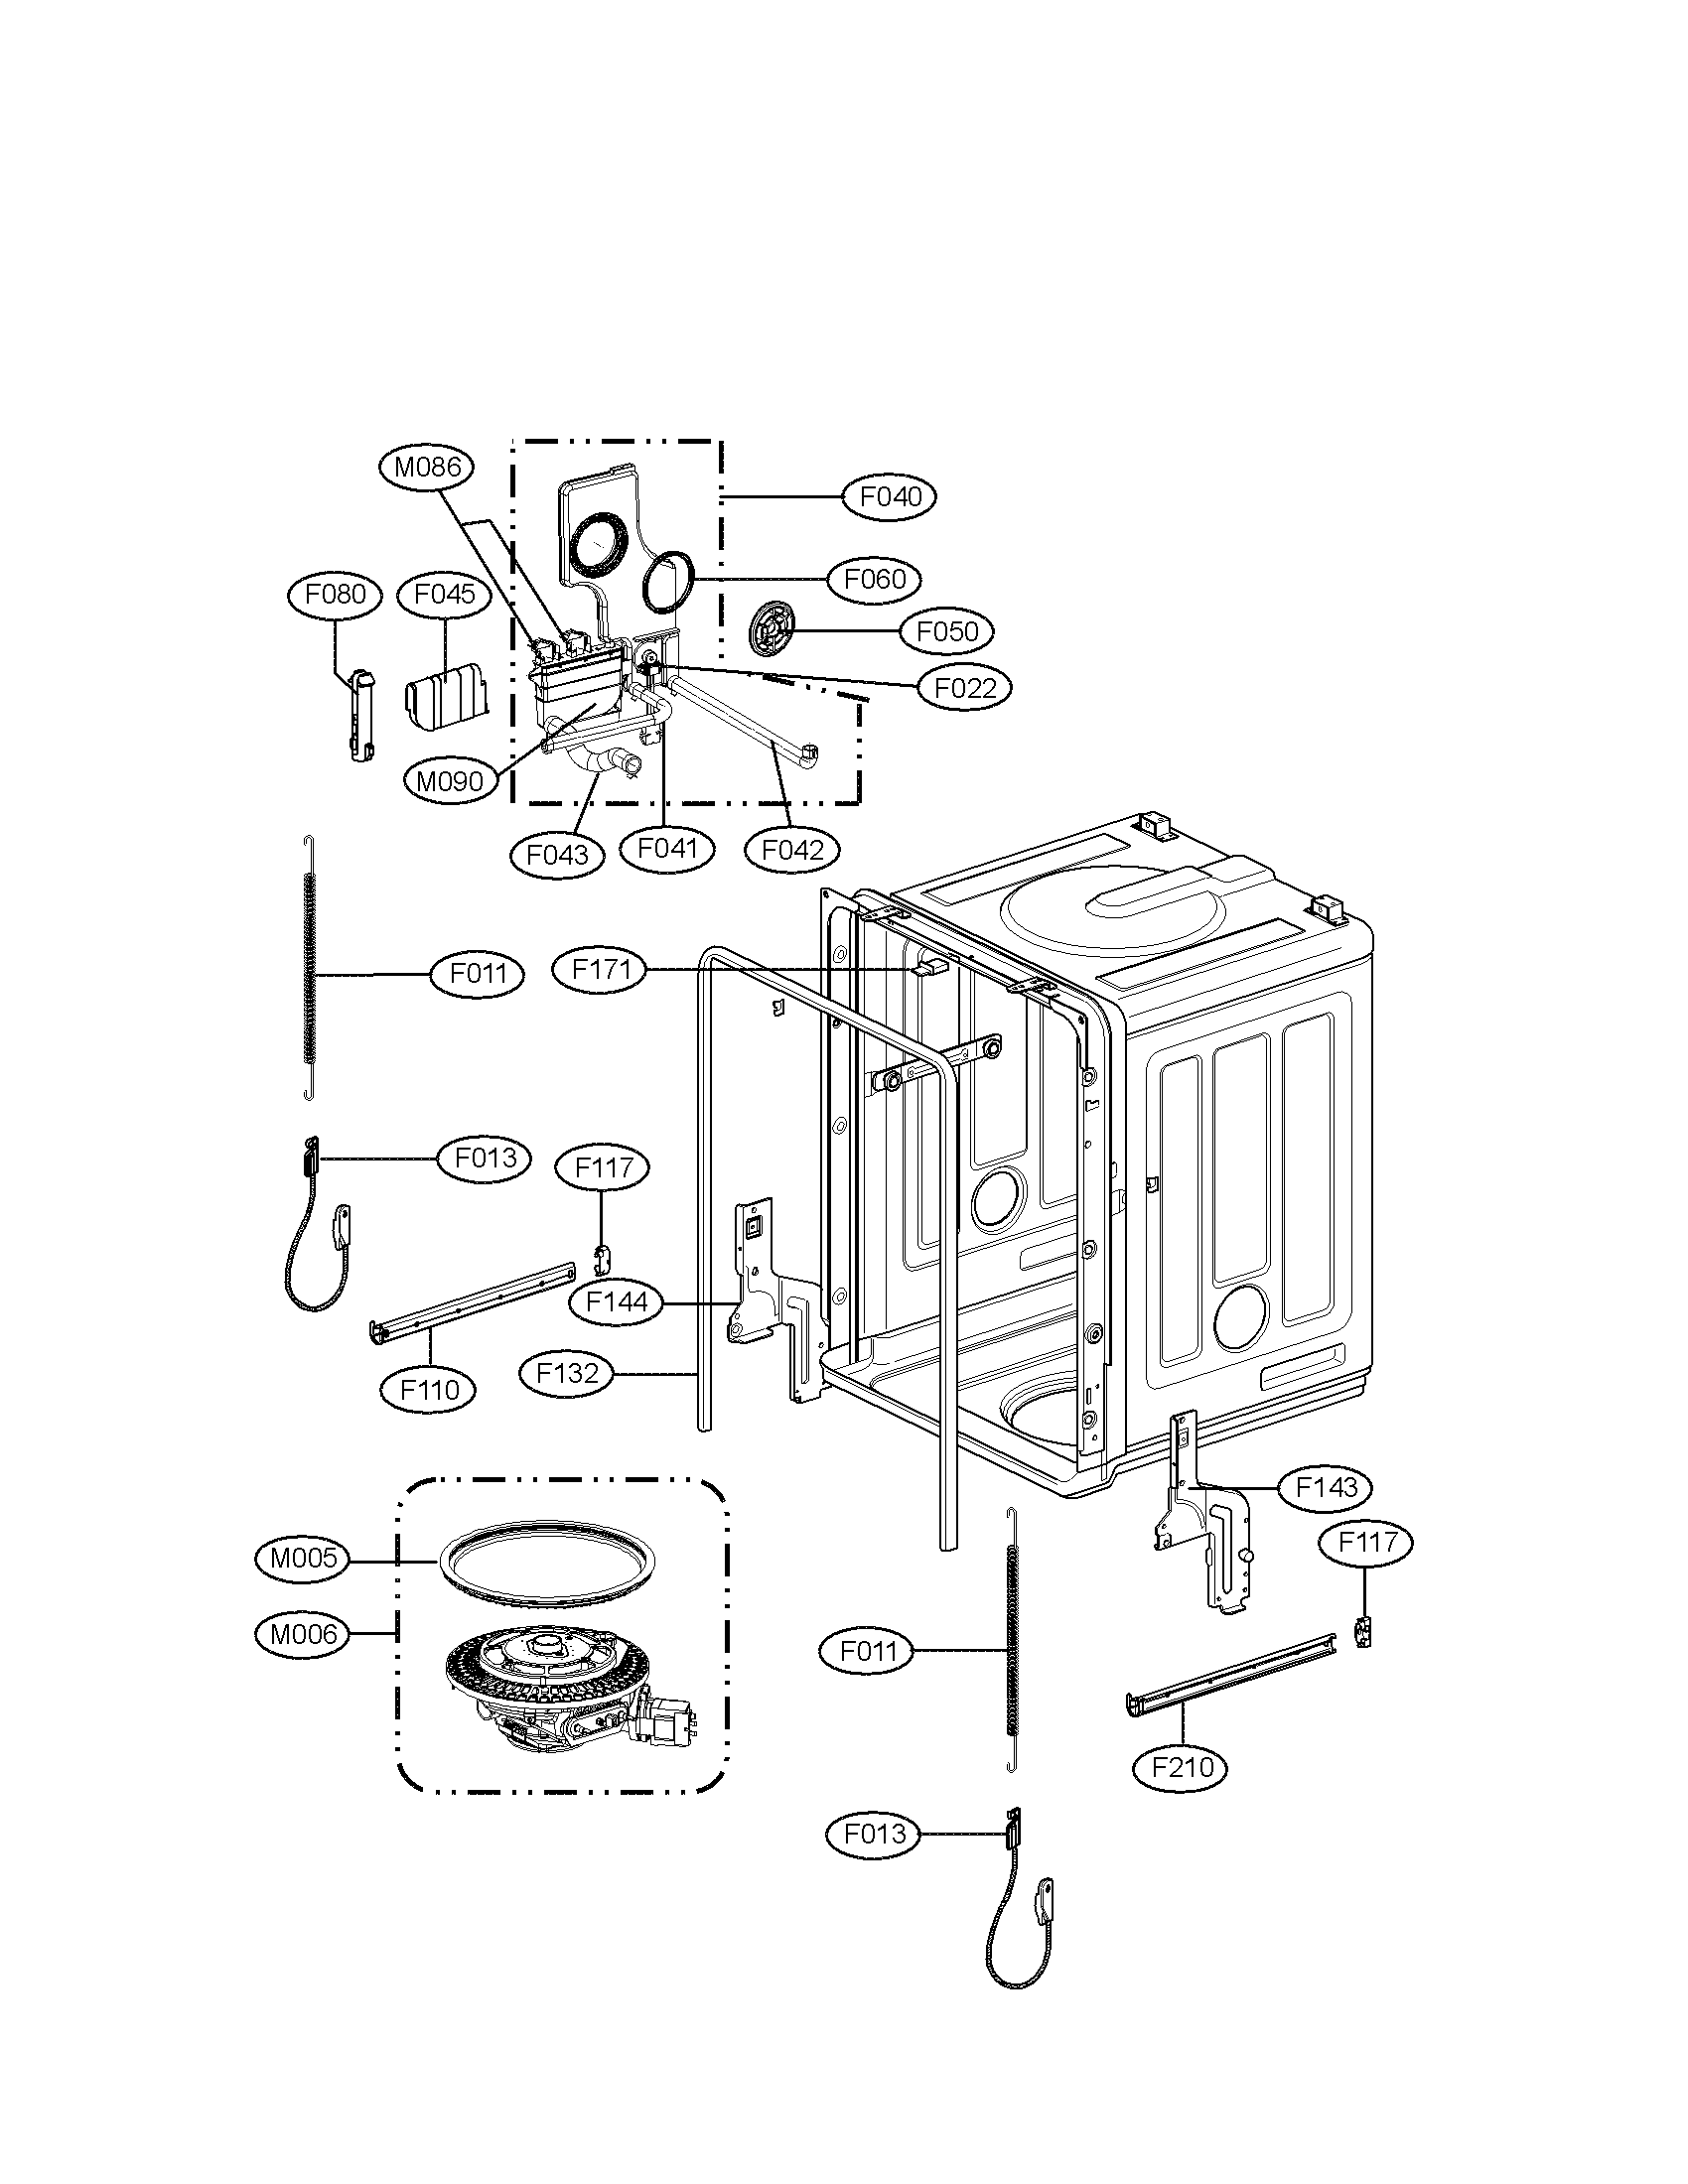 33 Lg Dishwasher Parts Diagram